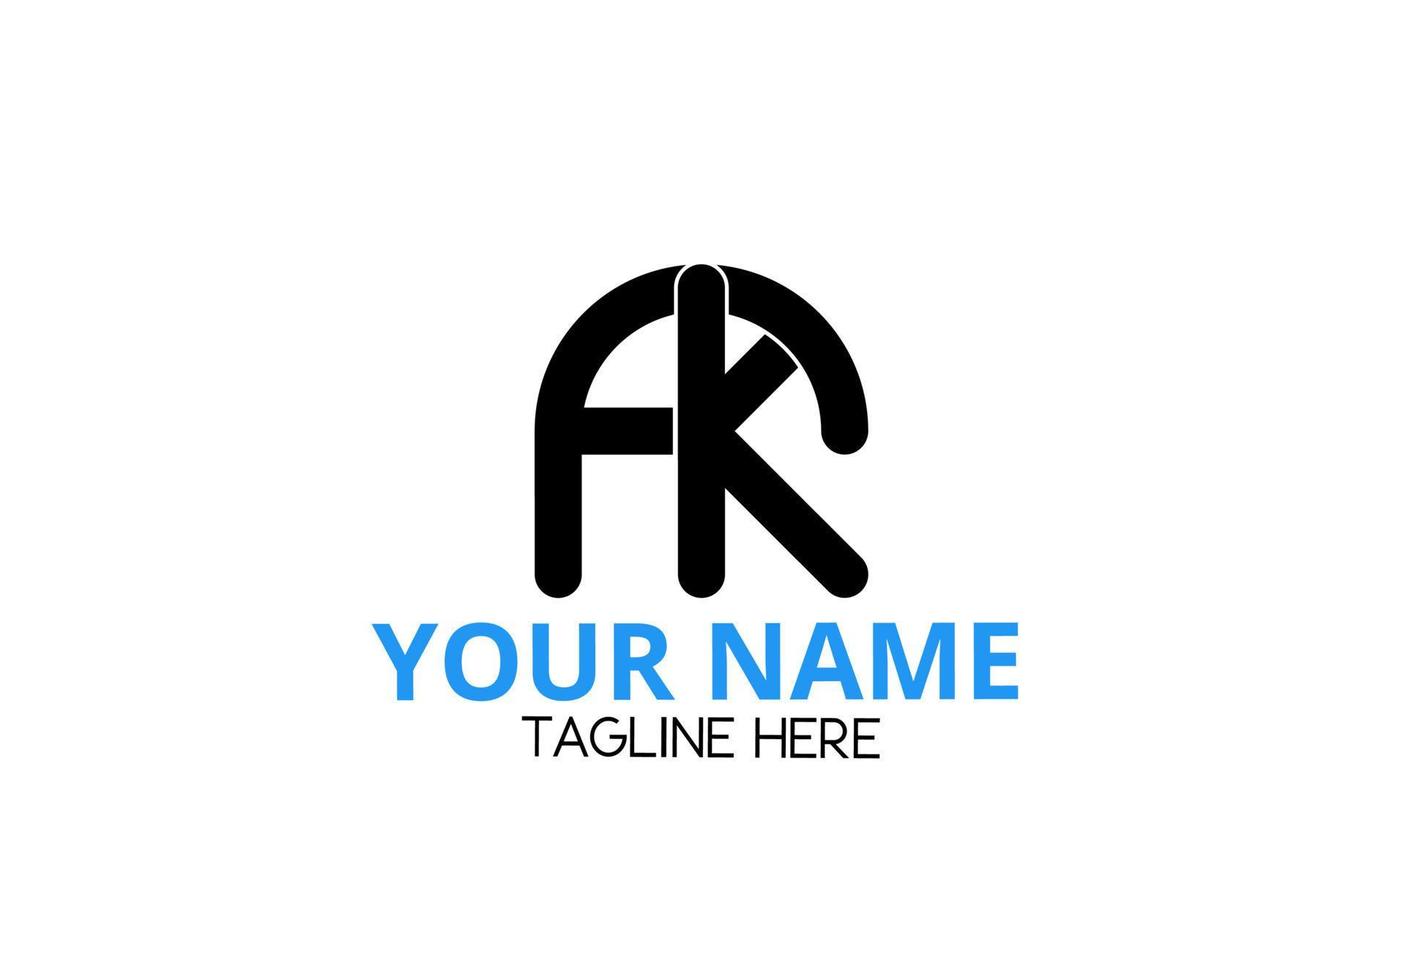 fk kf fk lettre initiale logo vecteur